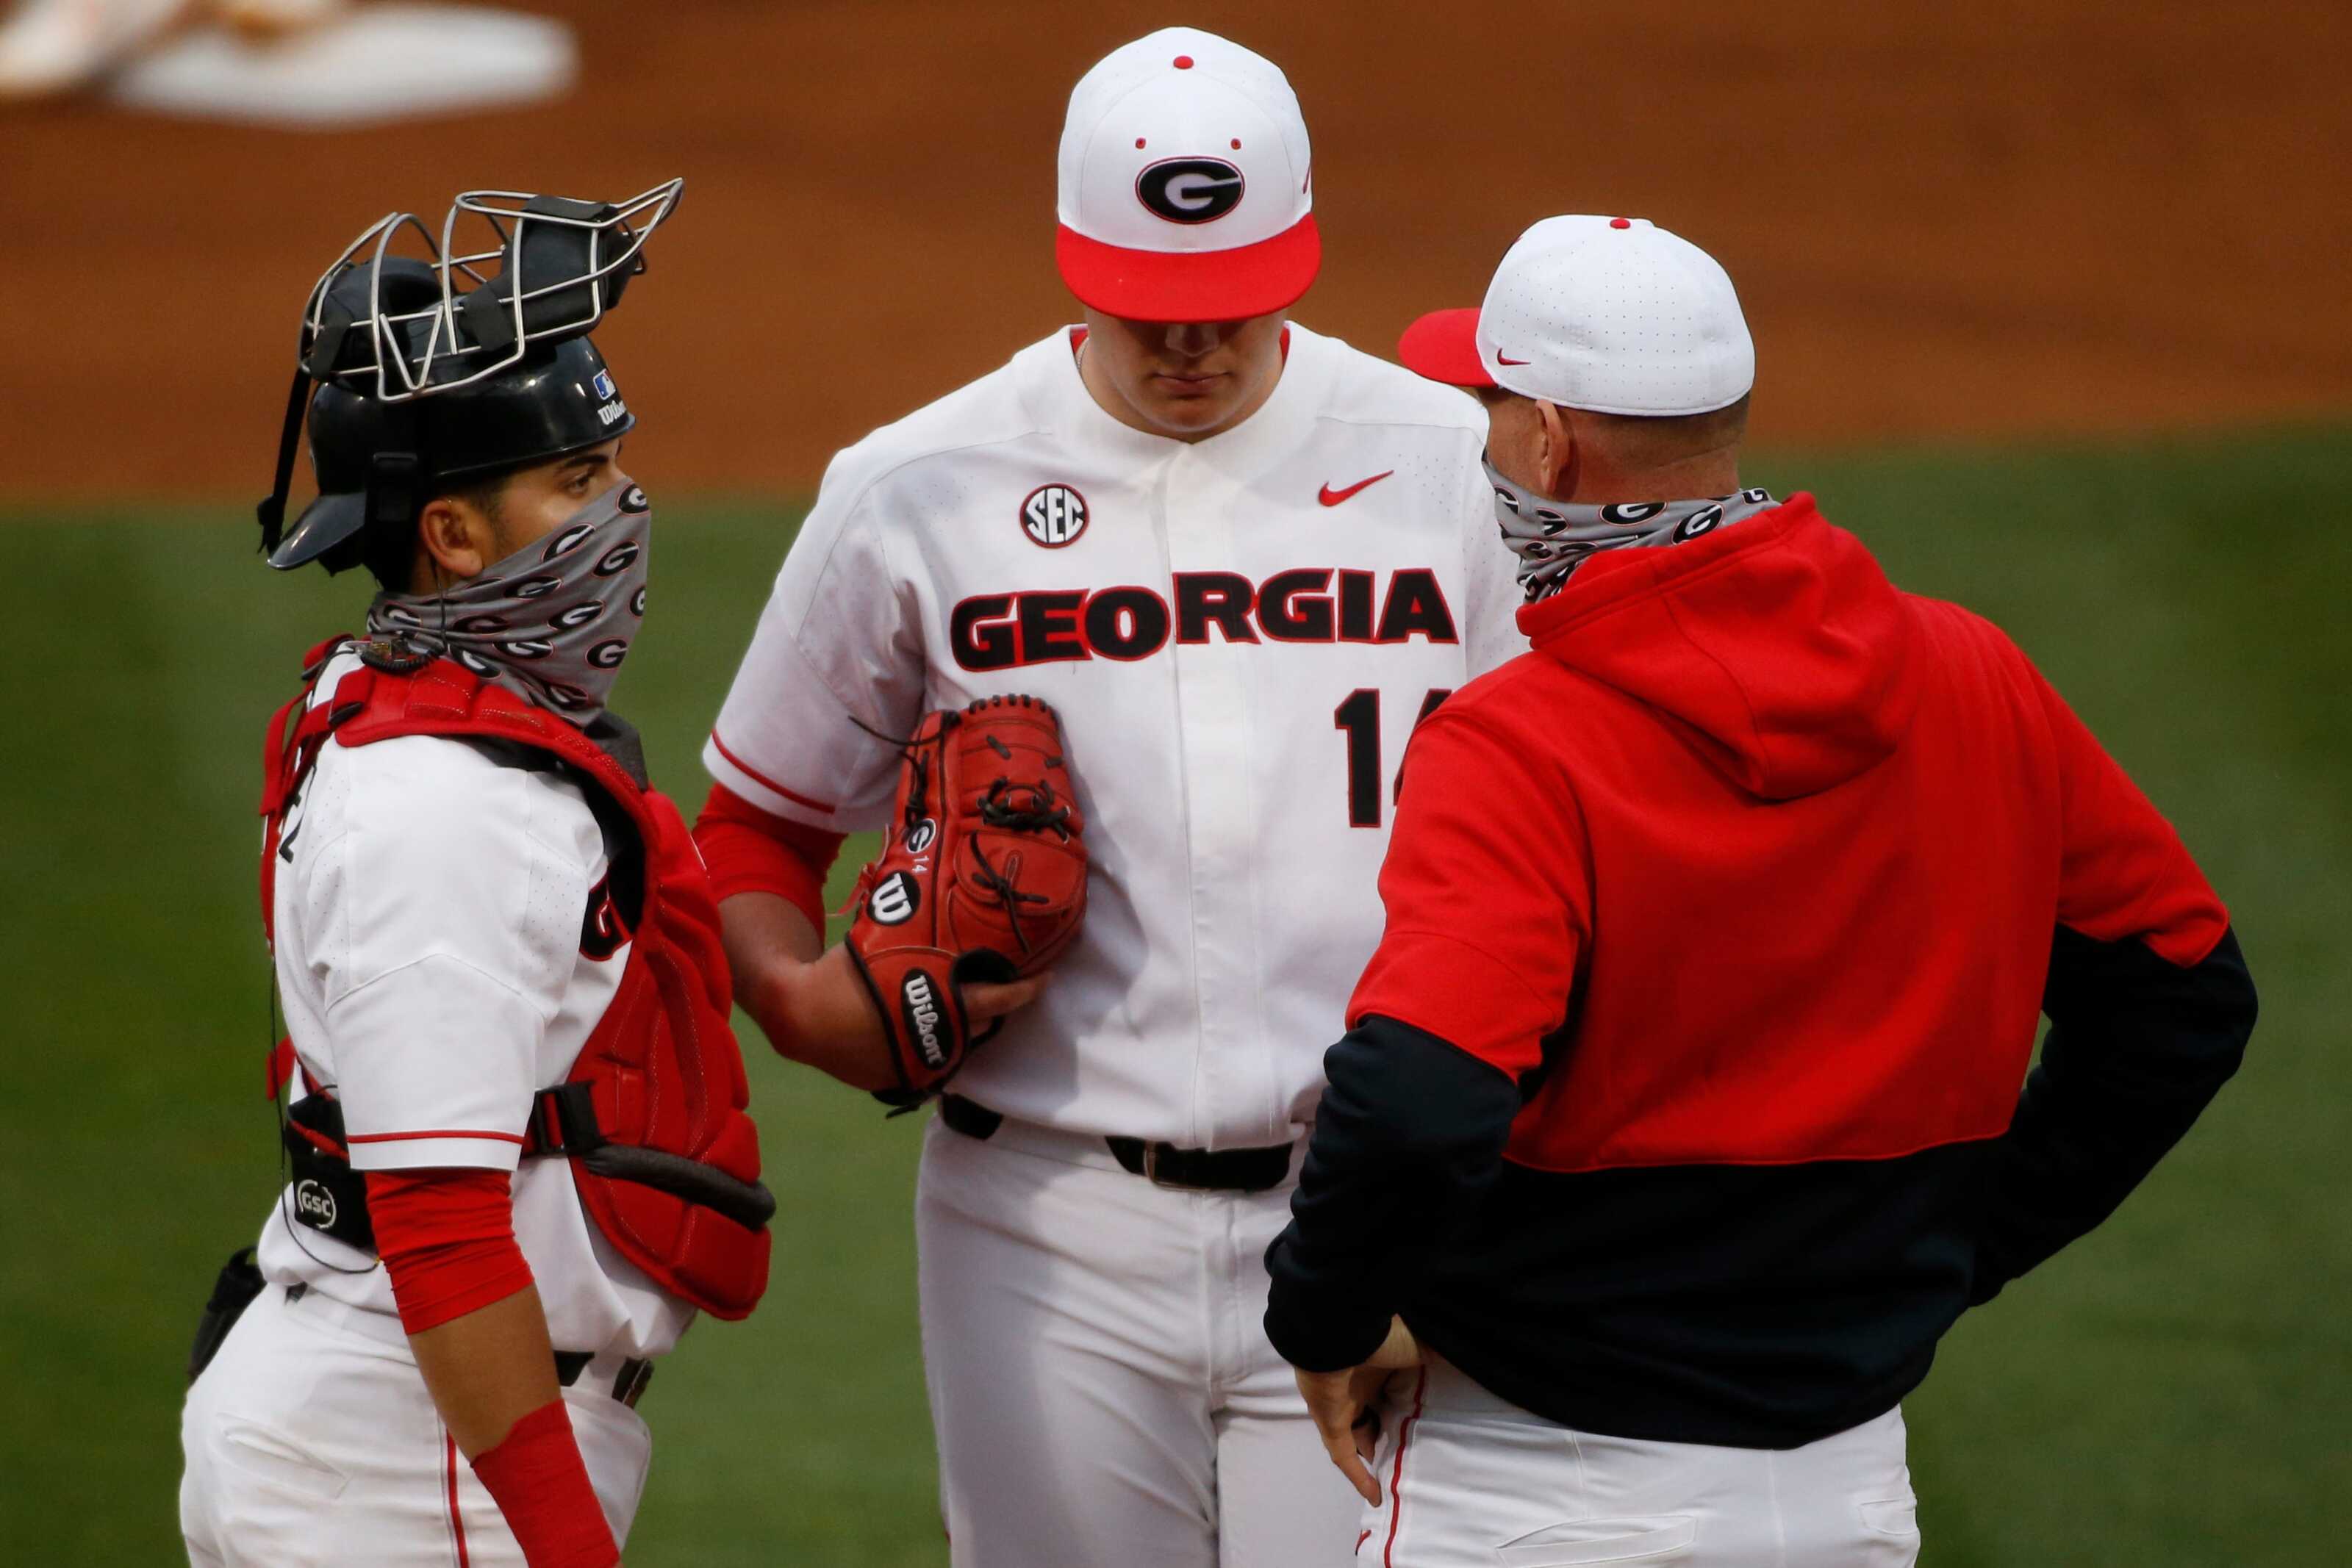 Pair of high scoring innings lift Georgia baseball past Georgia State